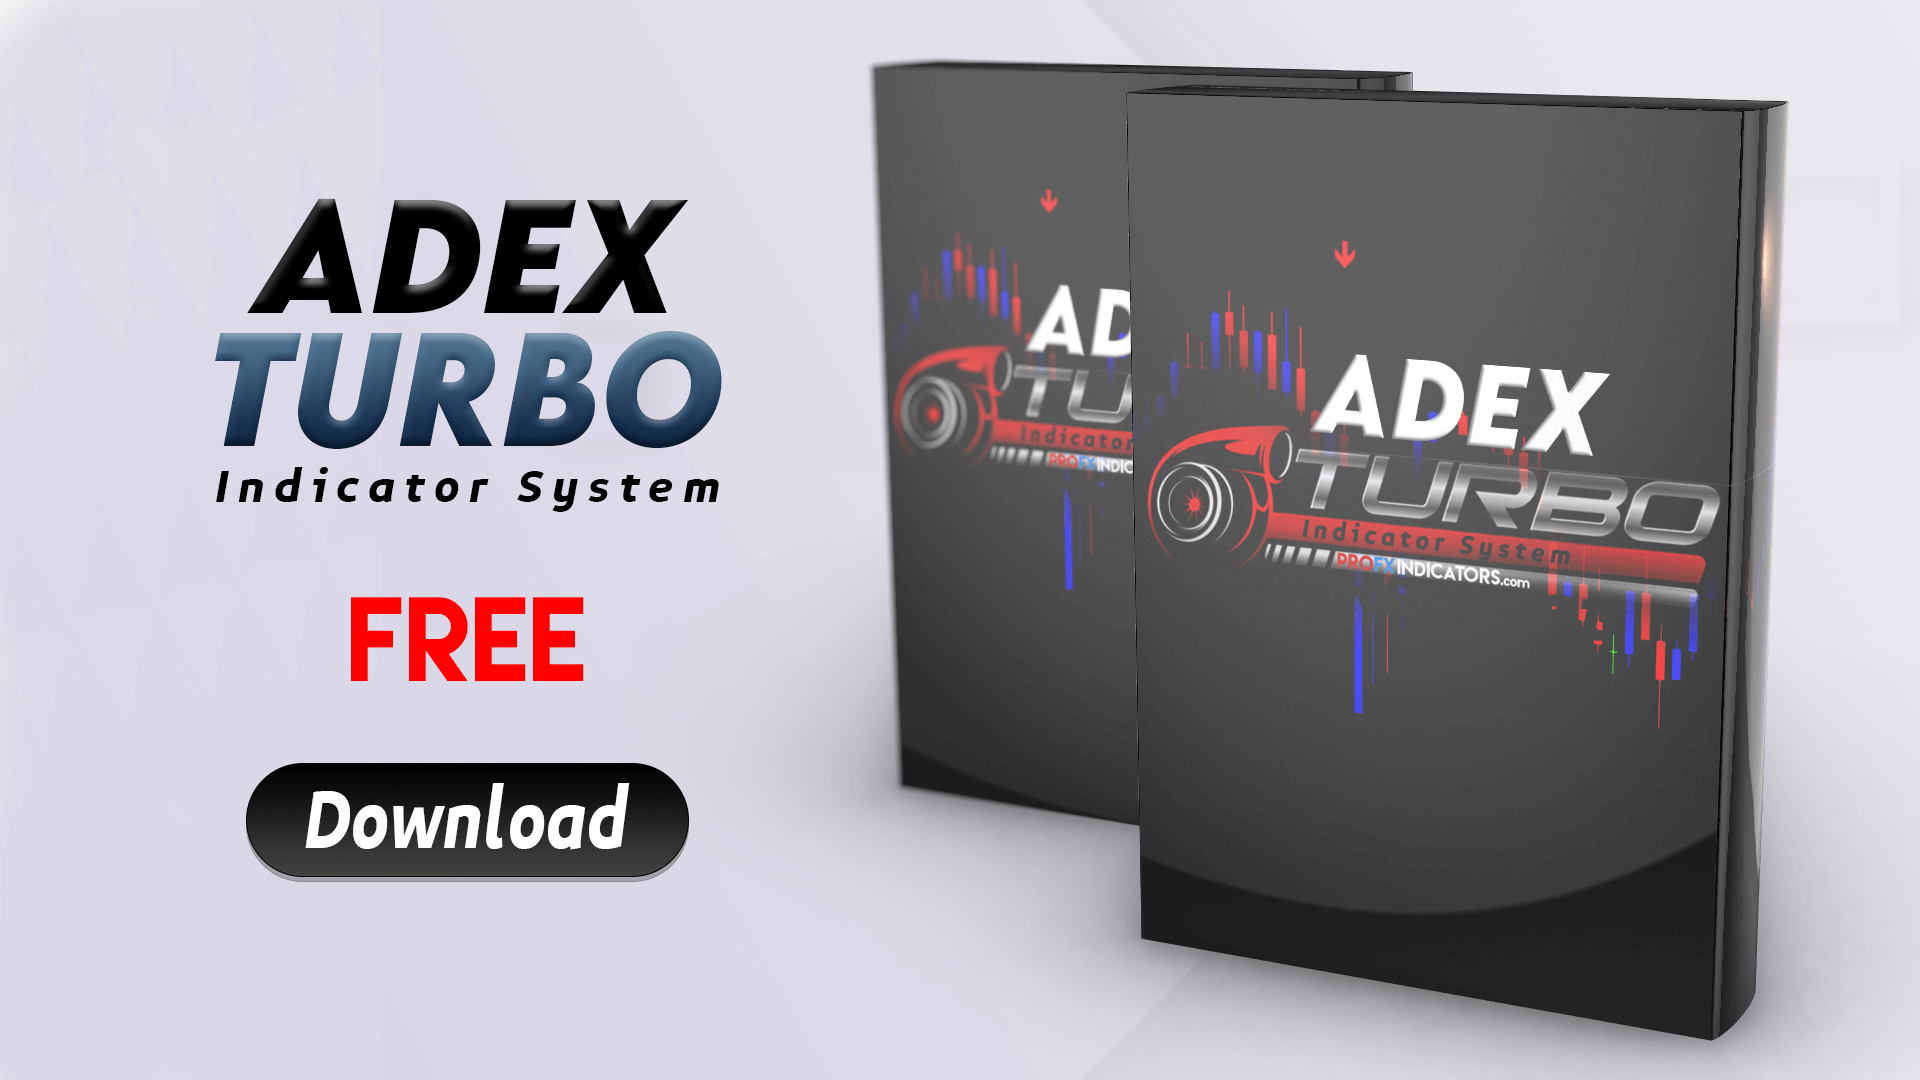 ADEX TURBO Indicator System